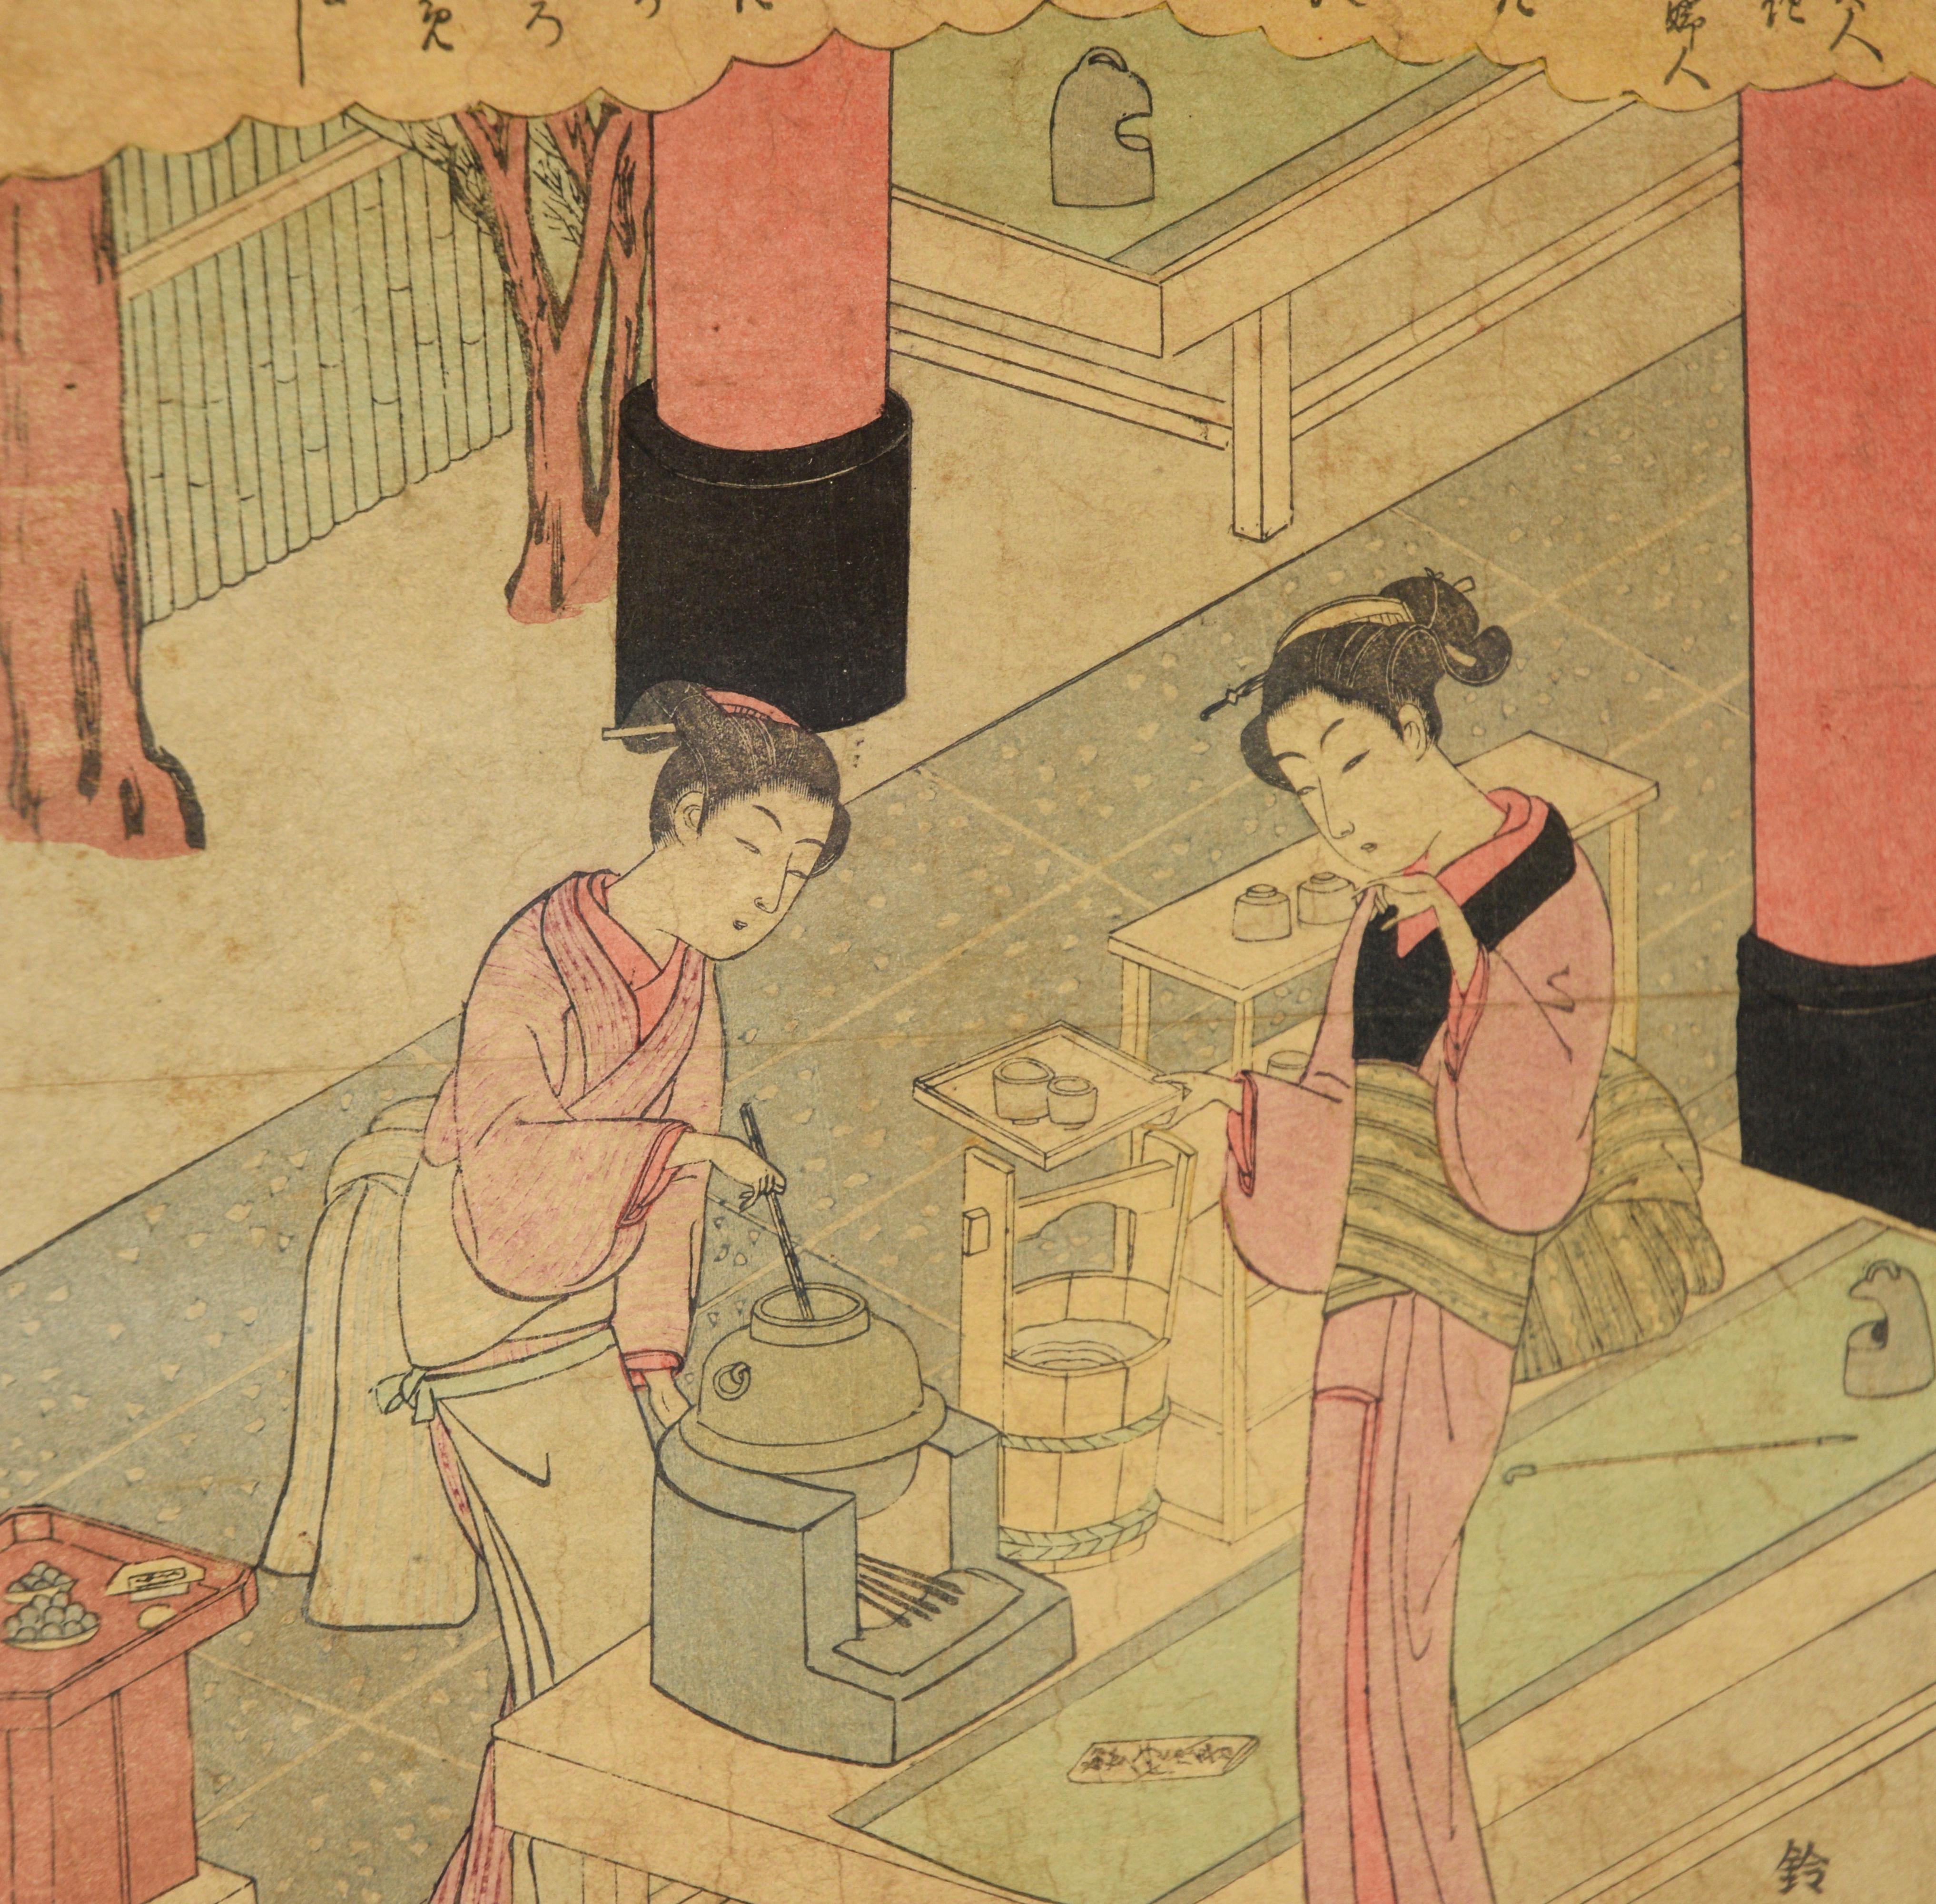 Deutzia Flowers: The Wife of Kasamori - Original Woodblock Print

Deutzia Flowers: The Wife of Kasamori, from the Series 